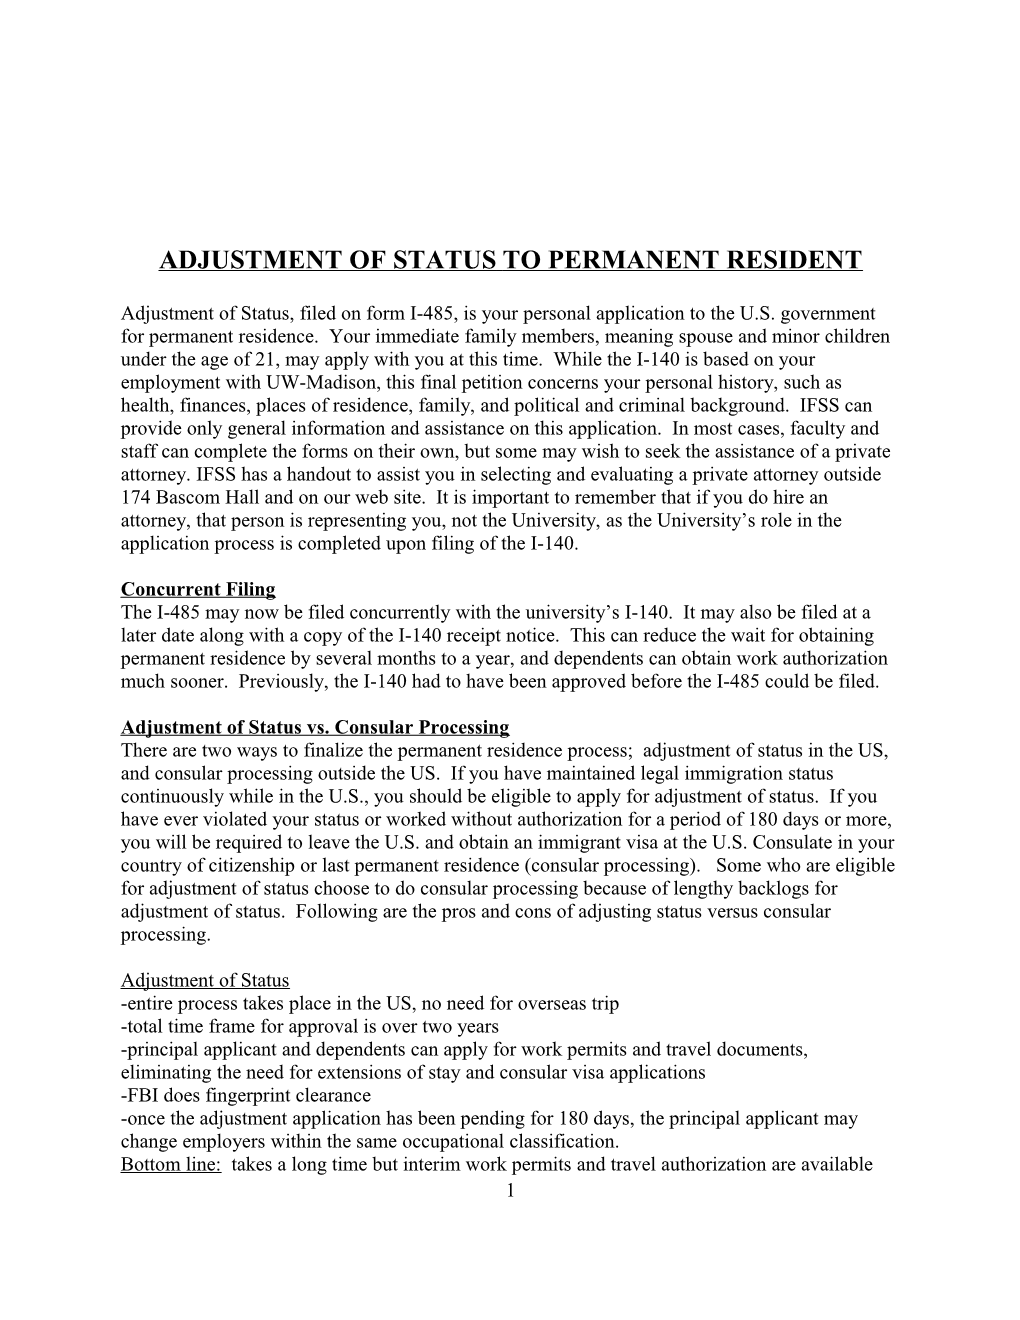 Adjustment of Statusto Permanent Resident